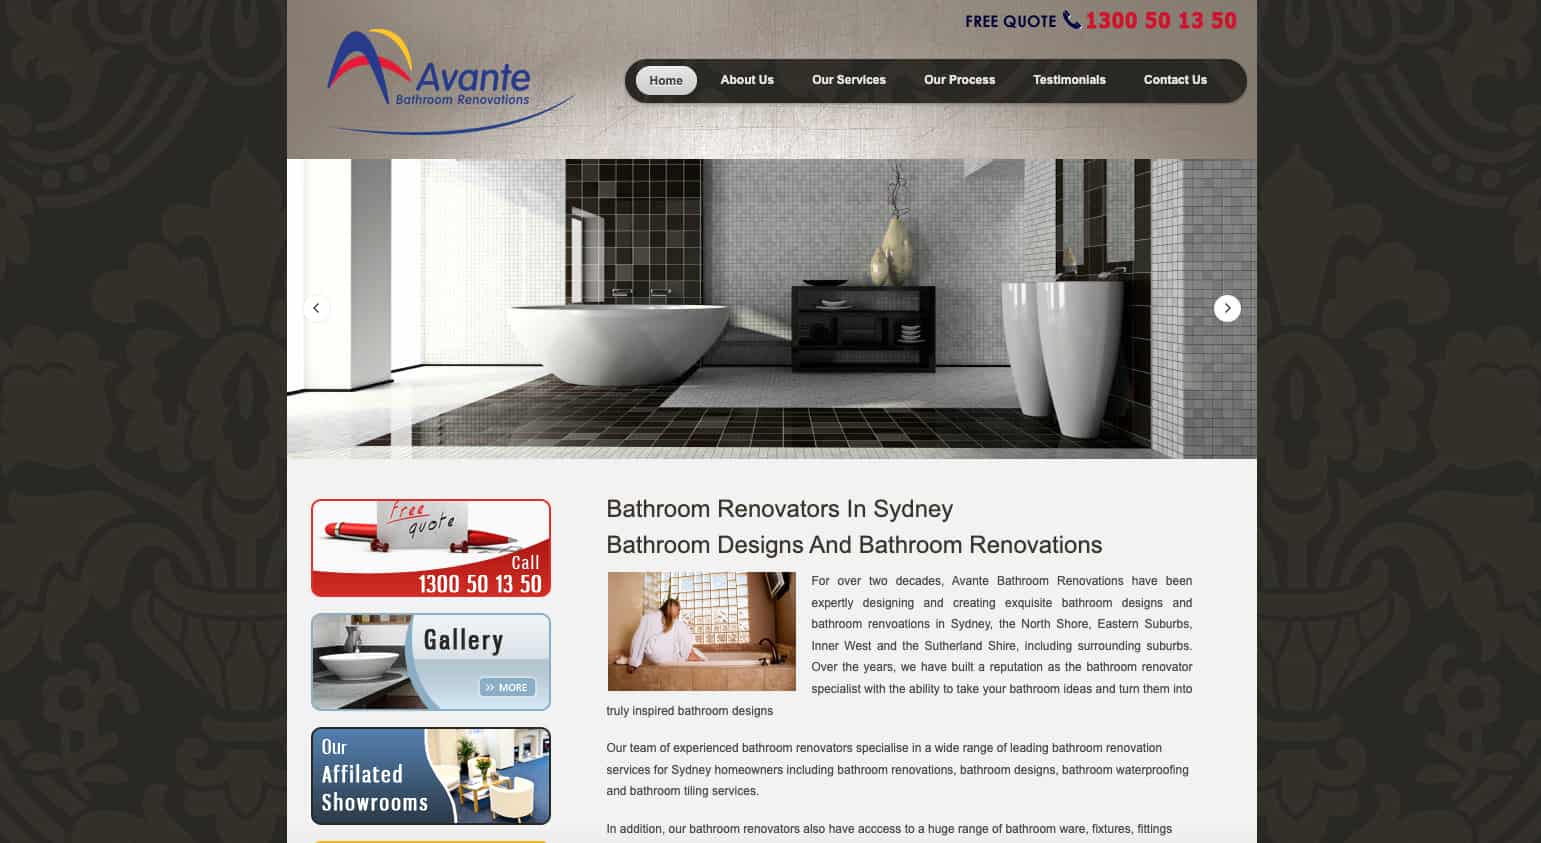 Avante Bathroom Renovations Sydney